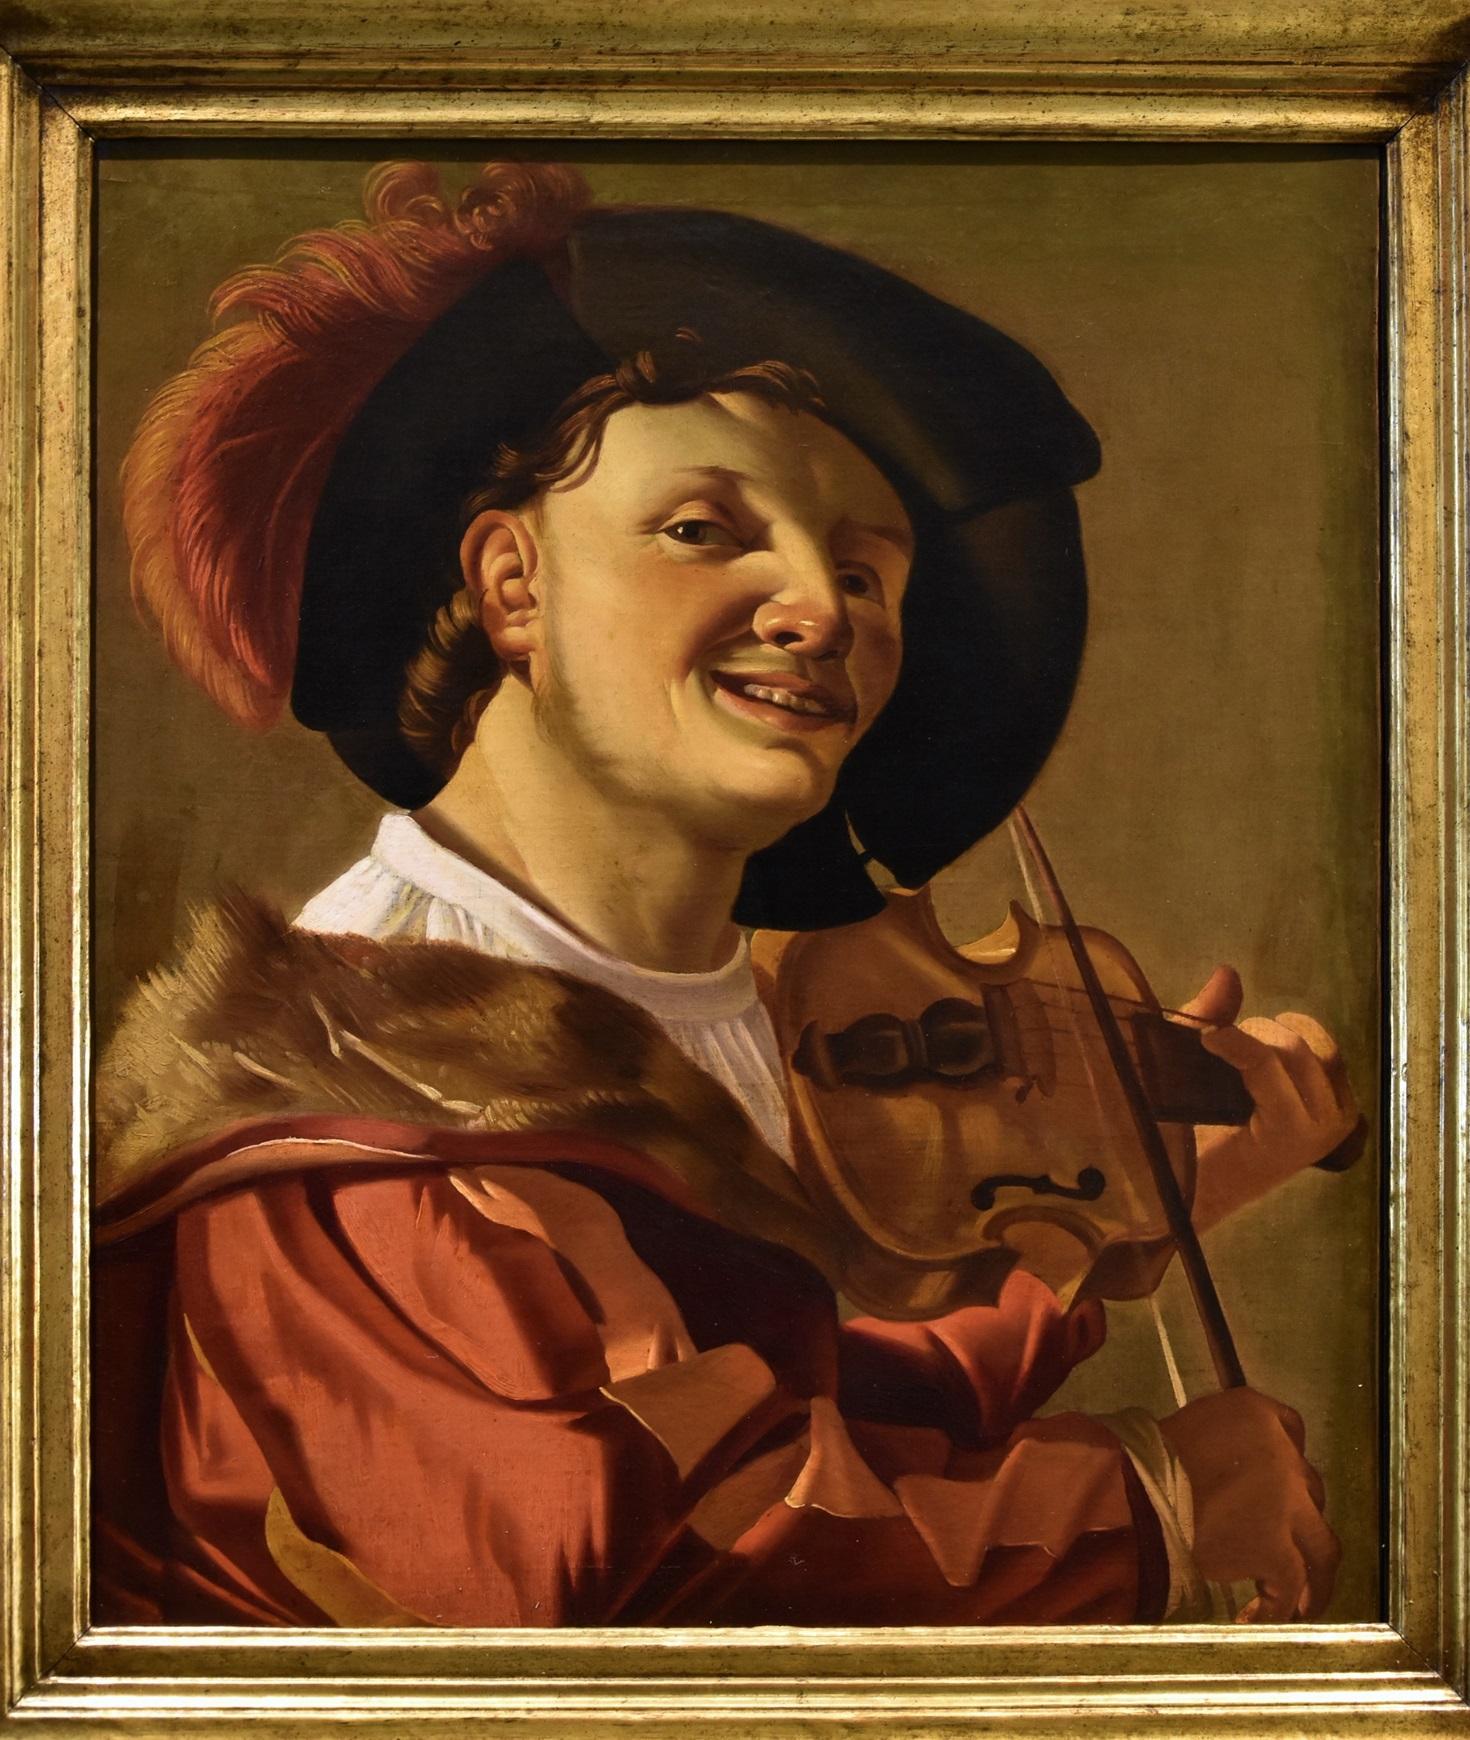 Hendrick Ter Brugghen (the Hague 1588-1629 Utrecht)  Portrait Painting - Violin Player Ter Brugghen Paint Oil on canvas 17th Century flemish Old master